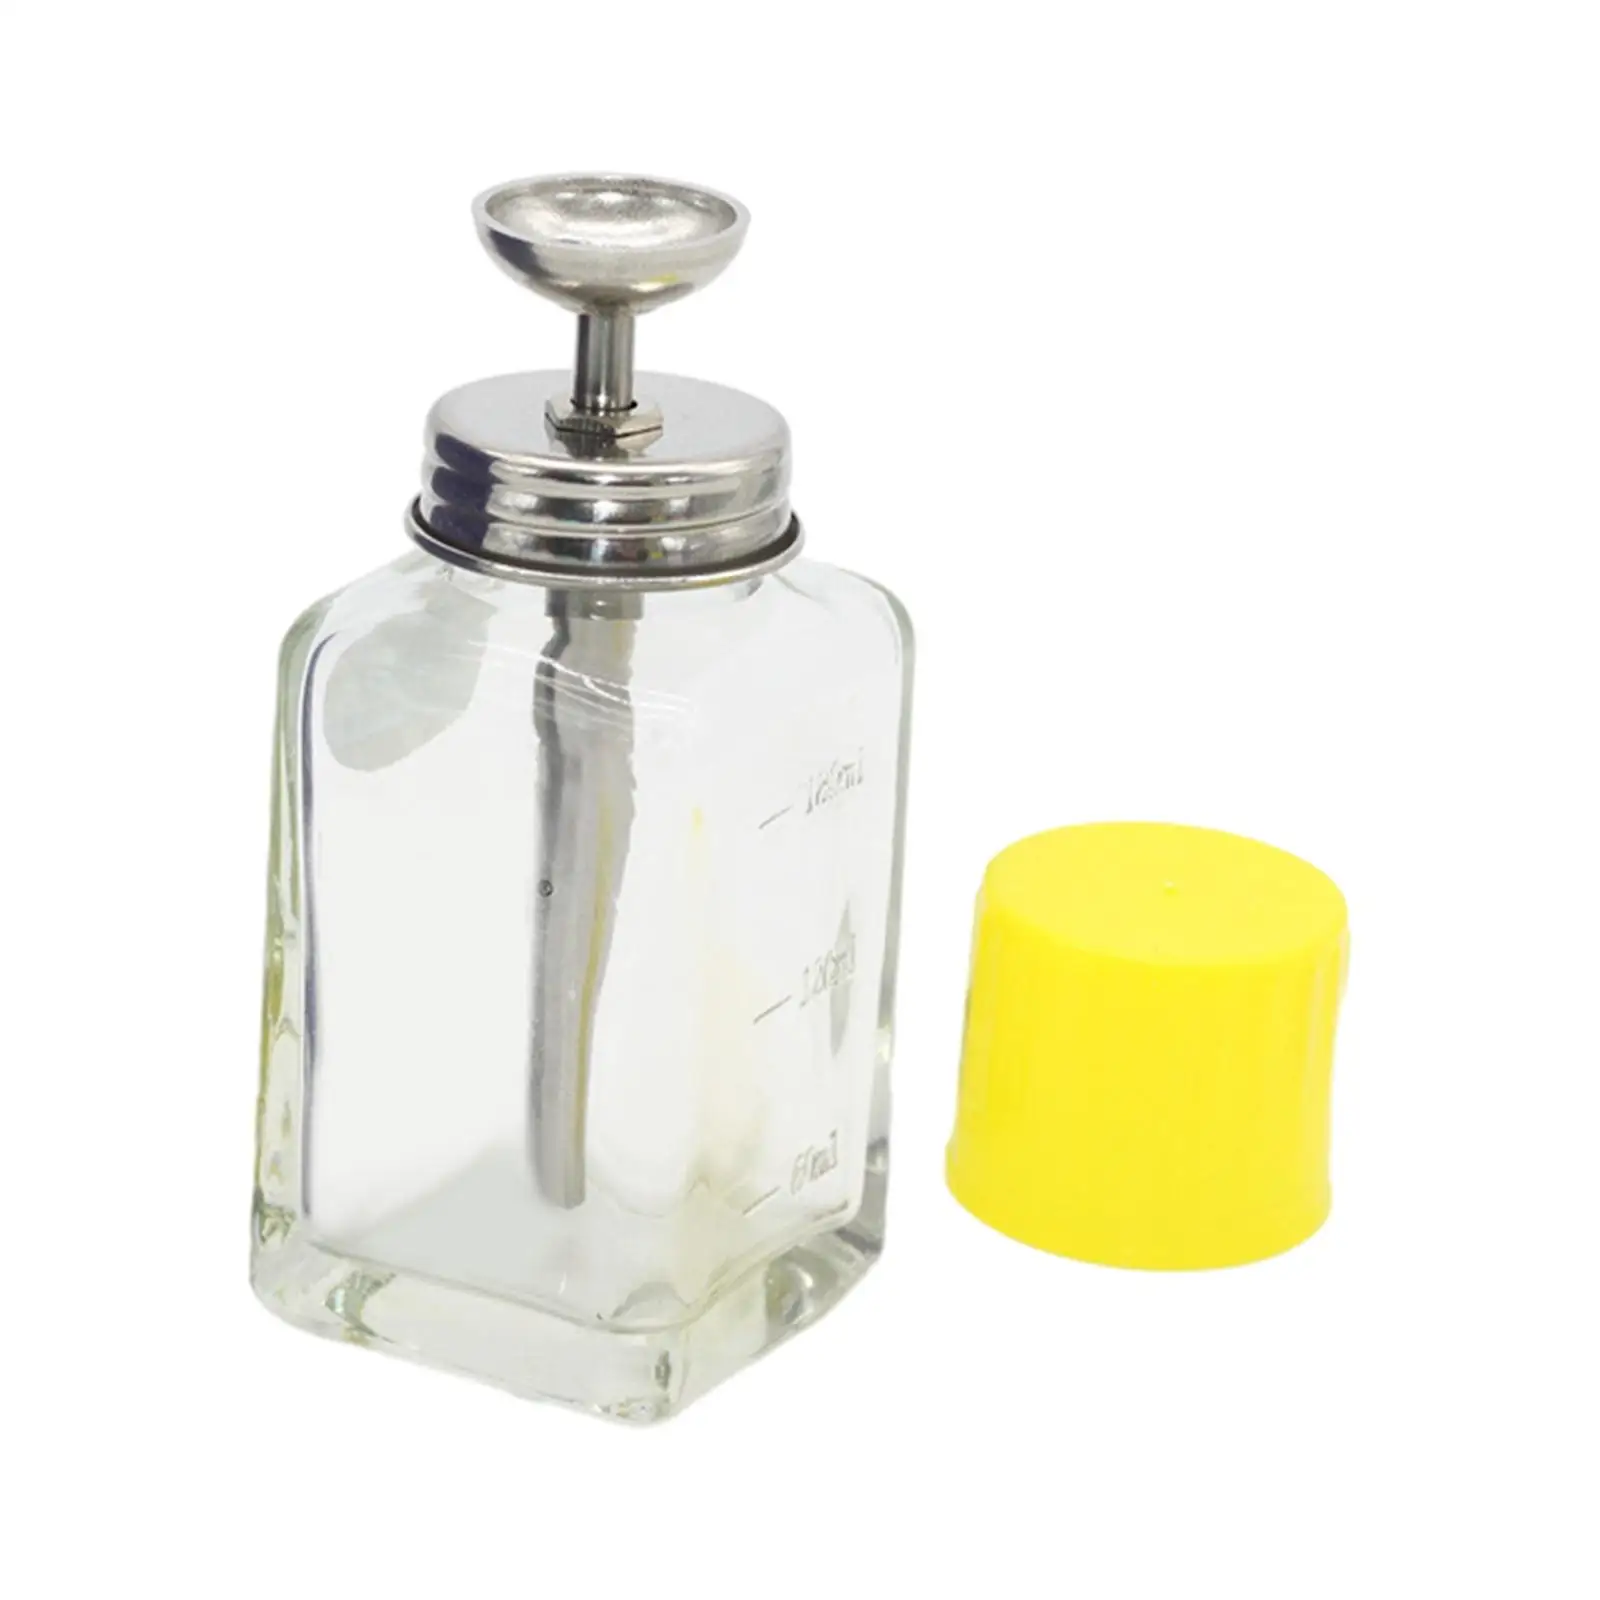 Press Bottle Clear Press Type Liquid Pump Dispenser for Manicure Store Salon